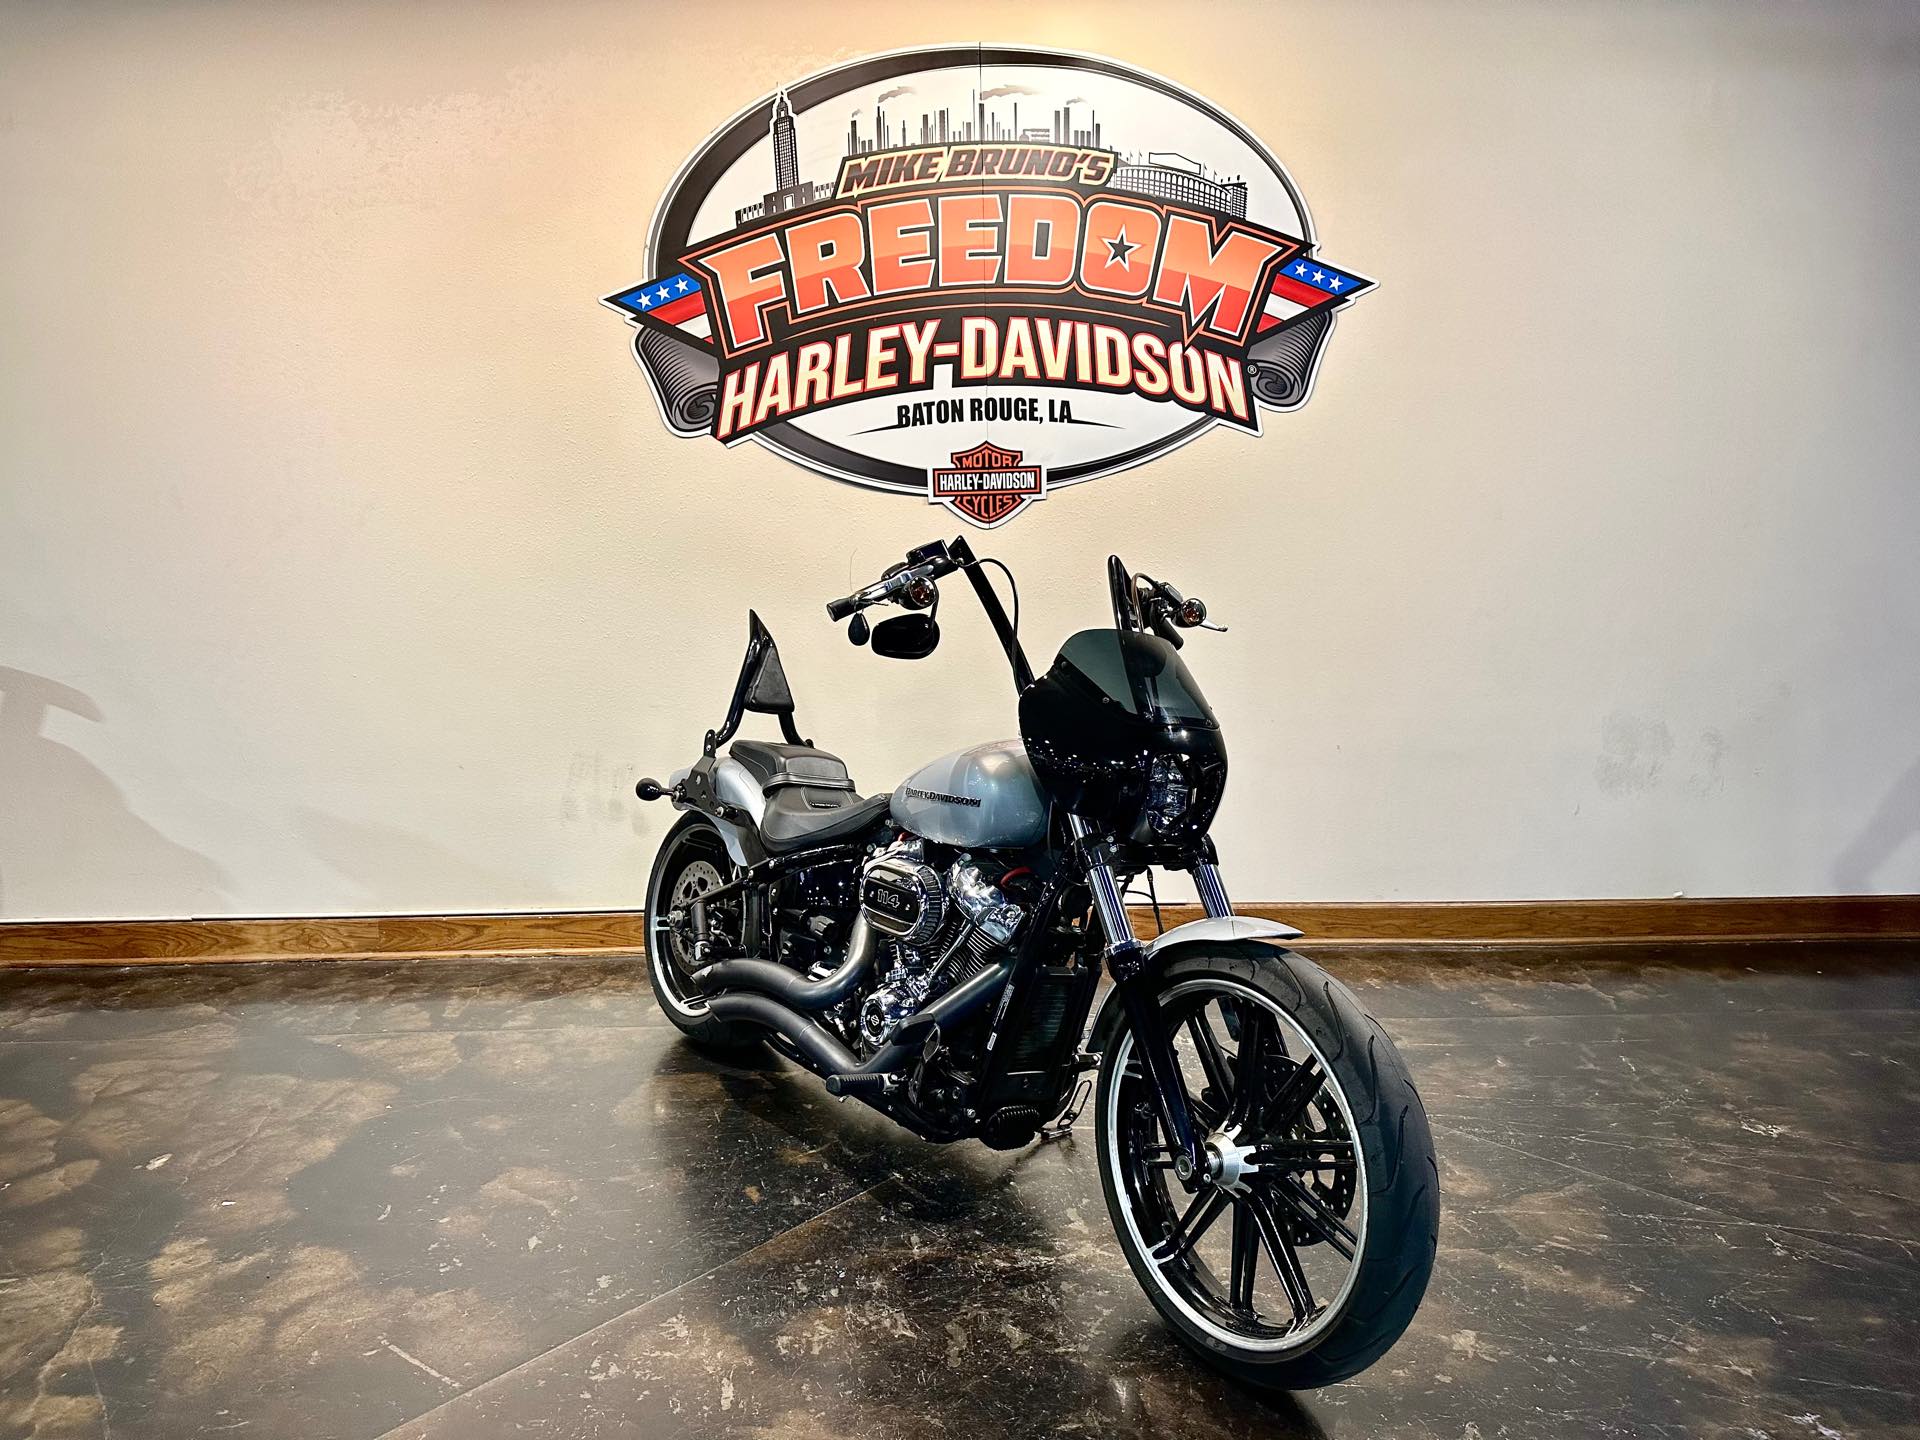 2020 Harley-Davidson Softail Breakout 114 at Mike Bruno's Freedom Harley-Davidson